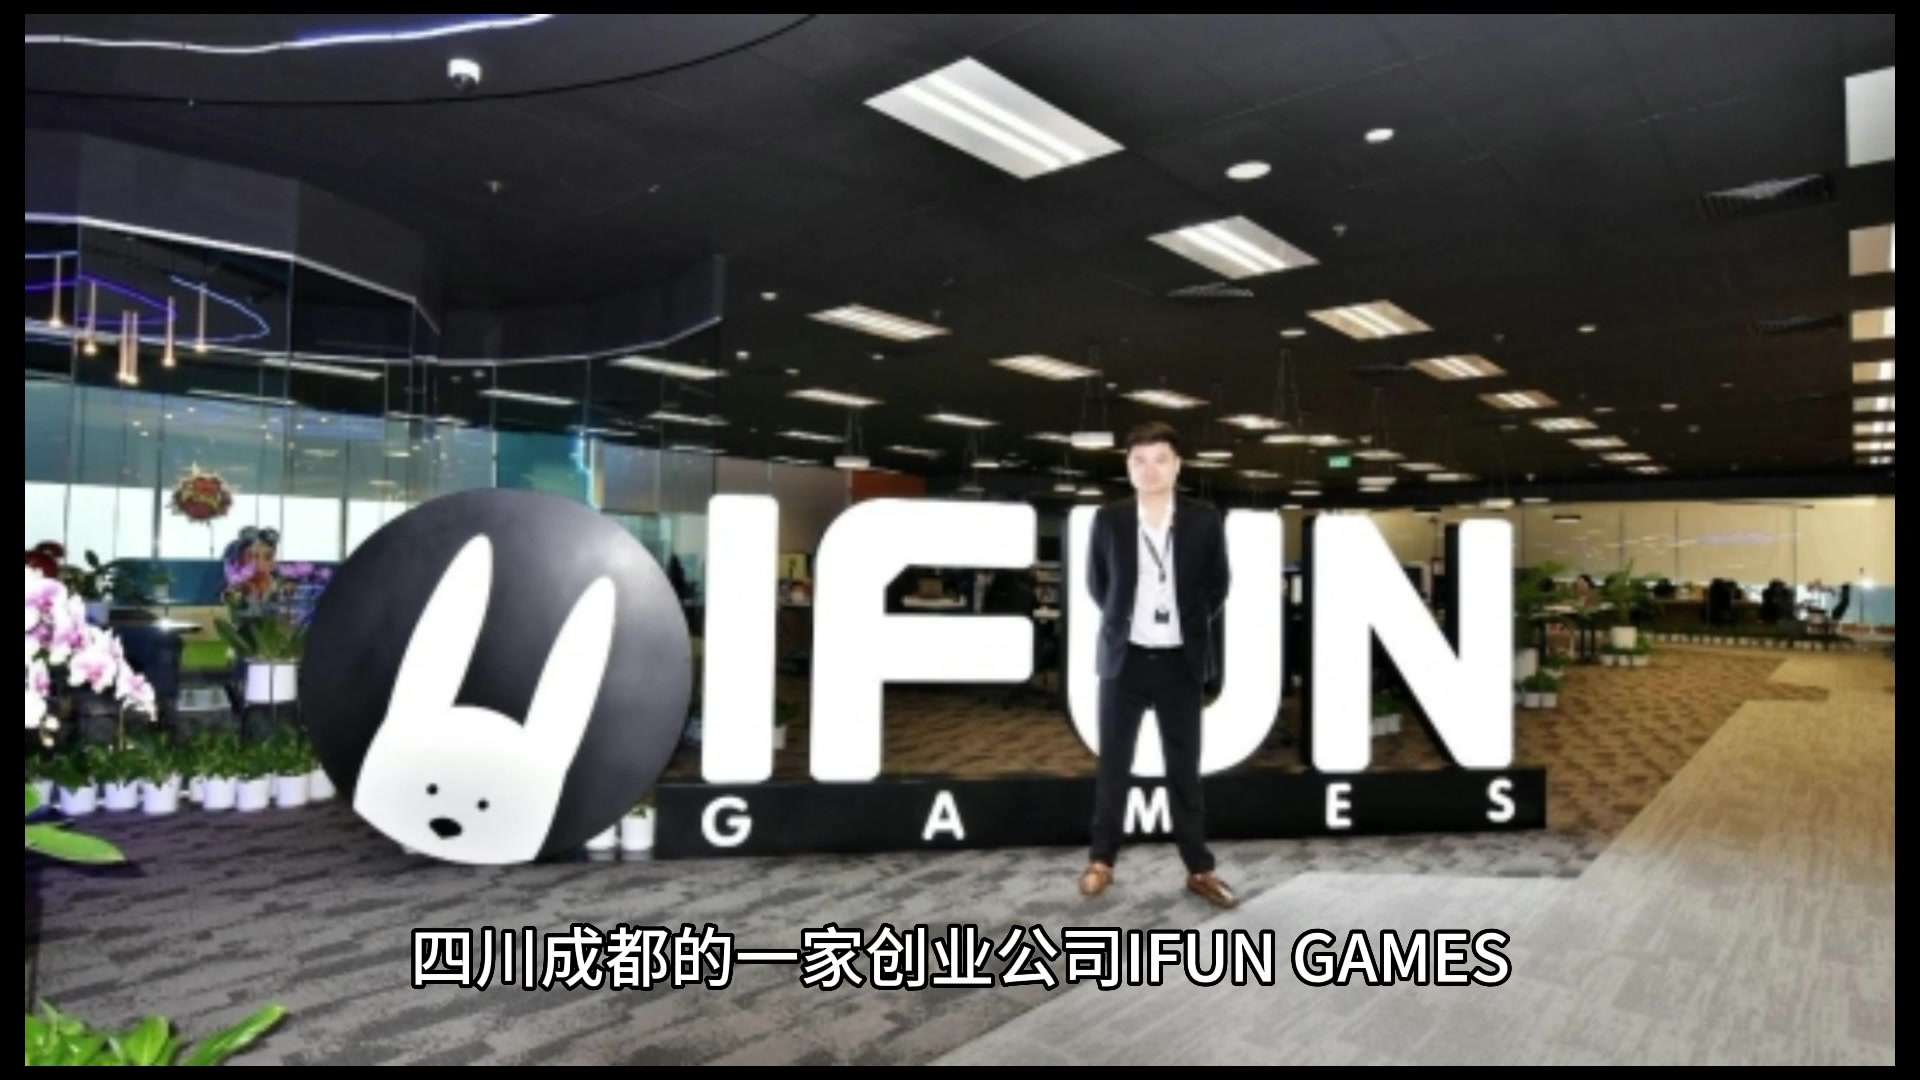 ifun games借助AI技术,IFUN GAMES能够更快速地将游戏本地化